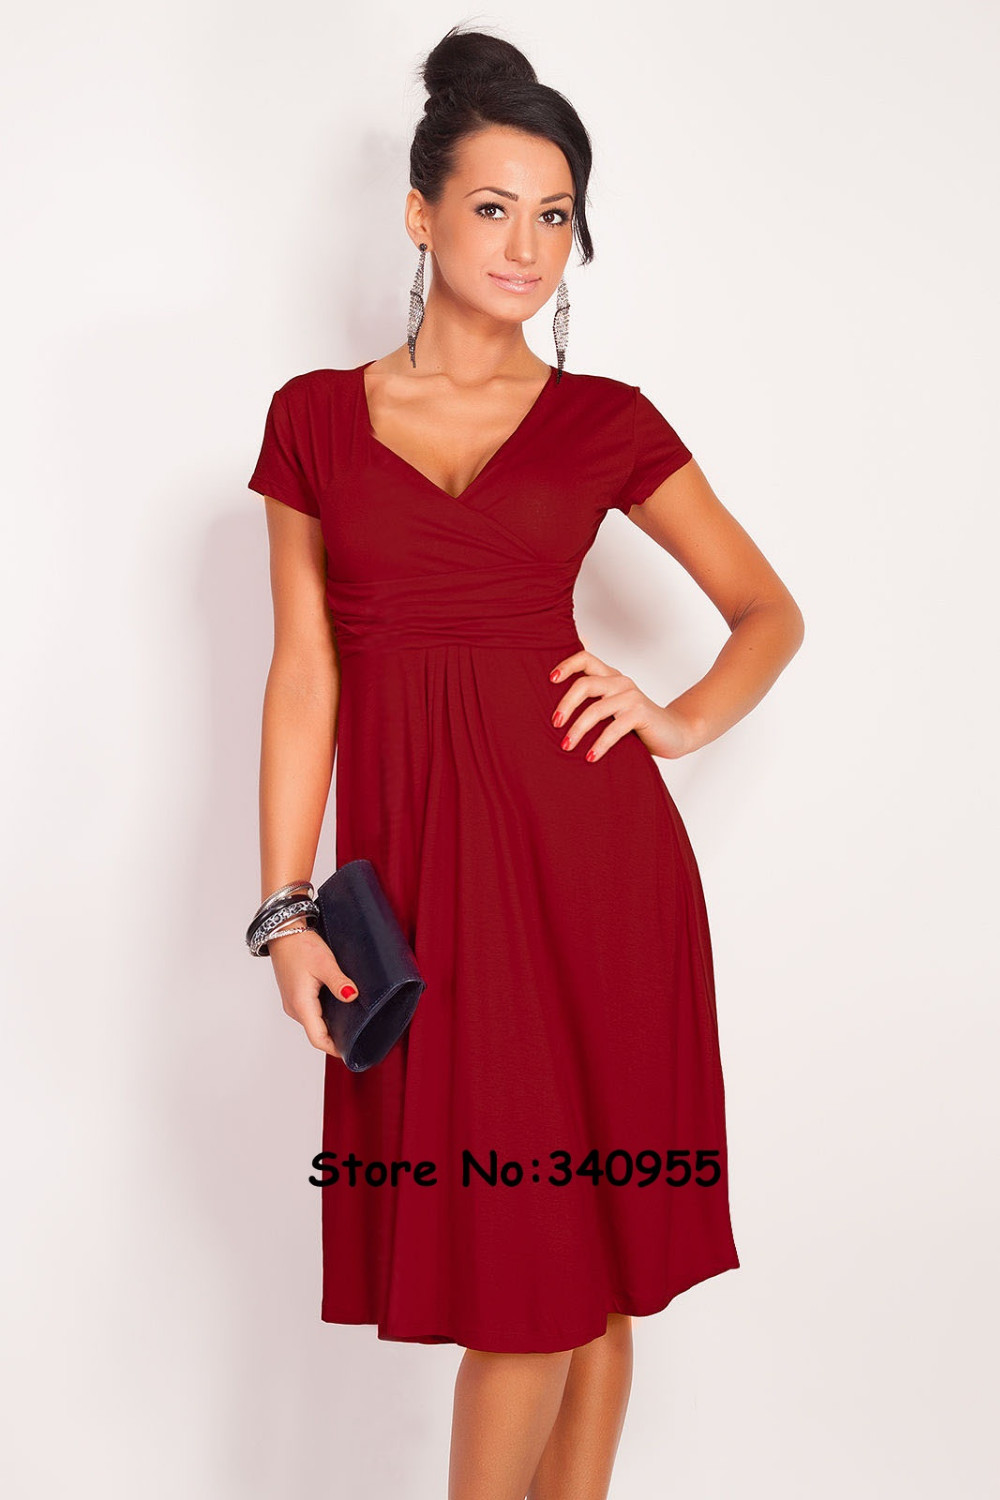 Women-Dresses-Summer-Casual-New-Fashion-Hot-Sale-V-neck-Short-Sleeve-Party-Dresses-Size-S-M-L-XL-XXL-2039256956